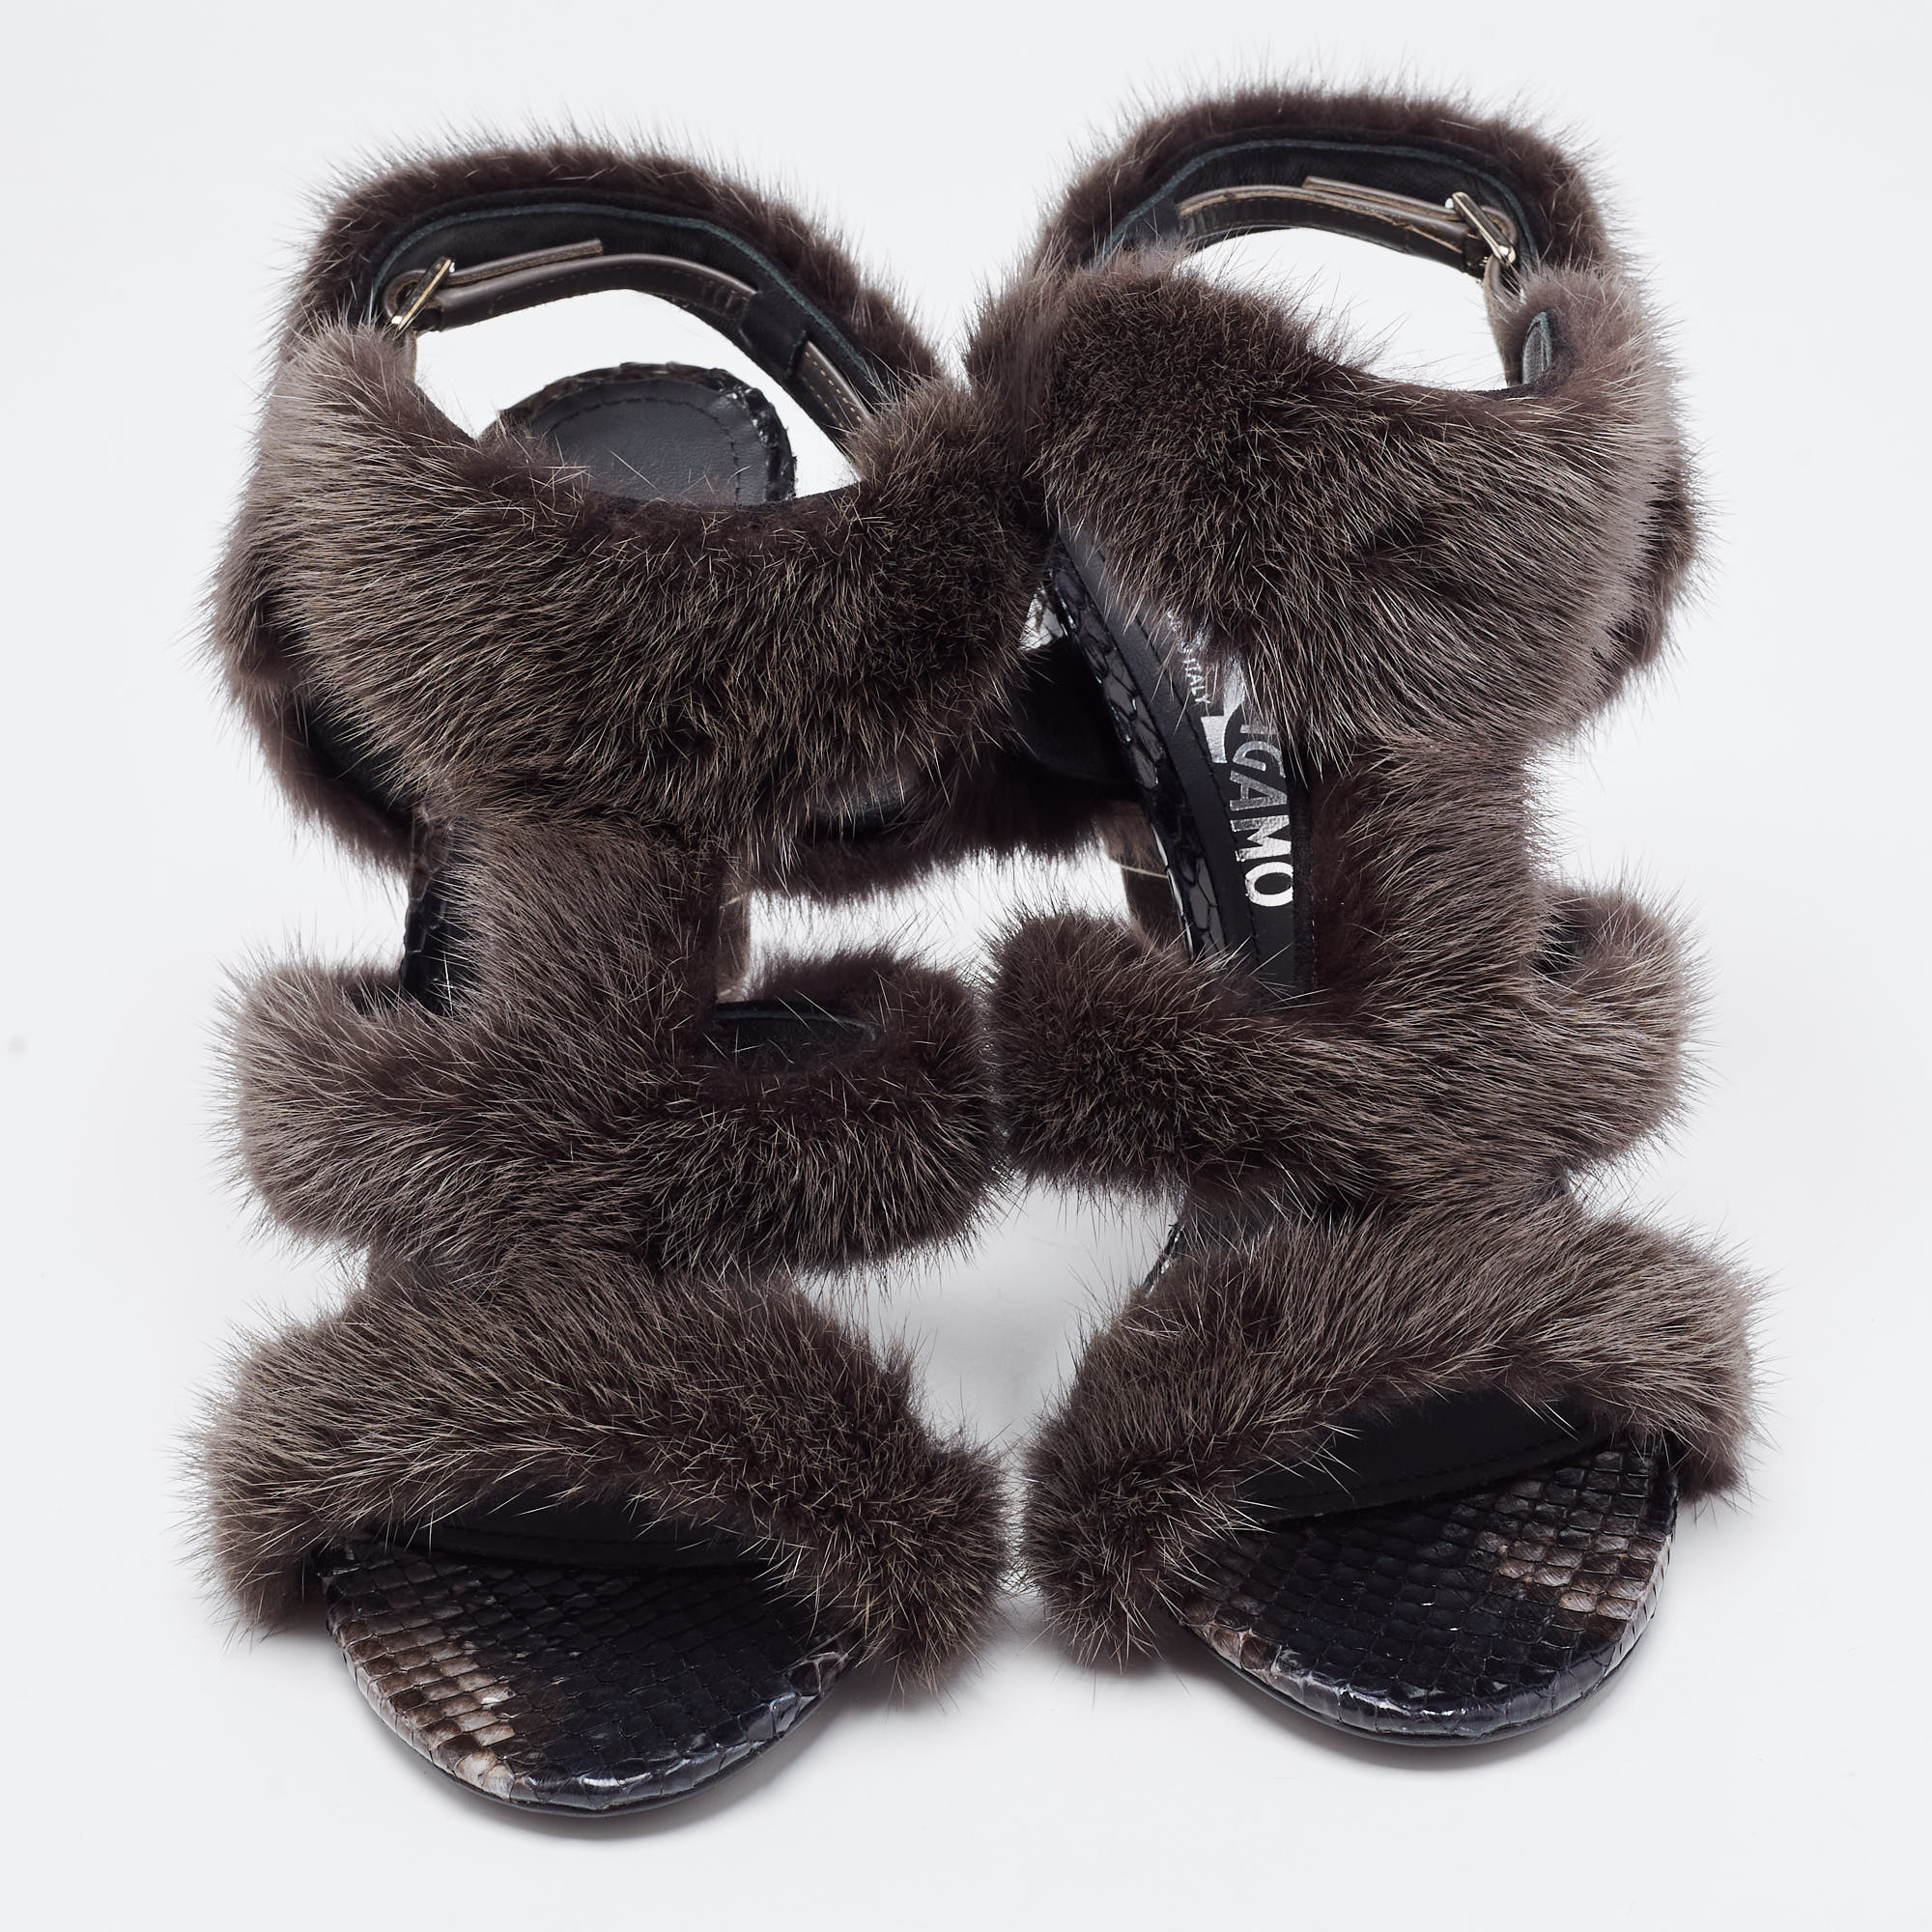 Salvatore Ferragamo Brown Mink Fur And Python Leather Cage Sandals Size 39